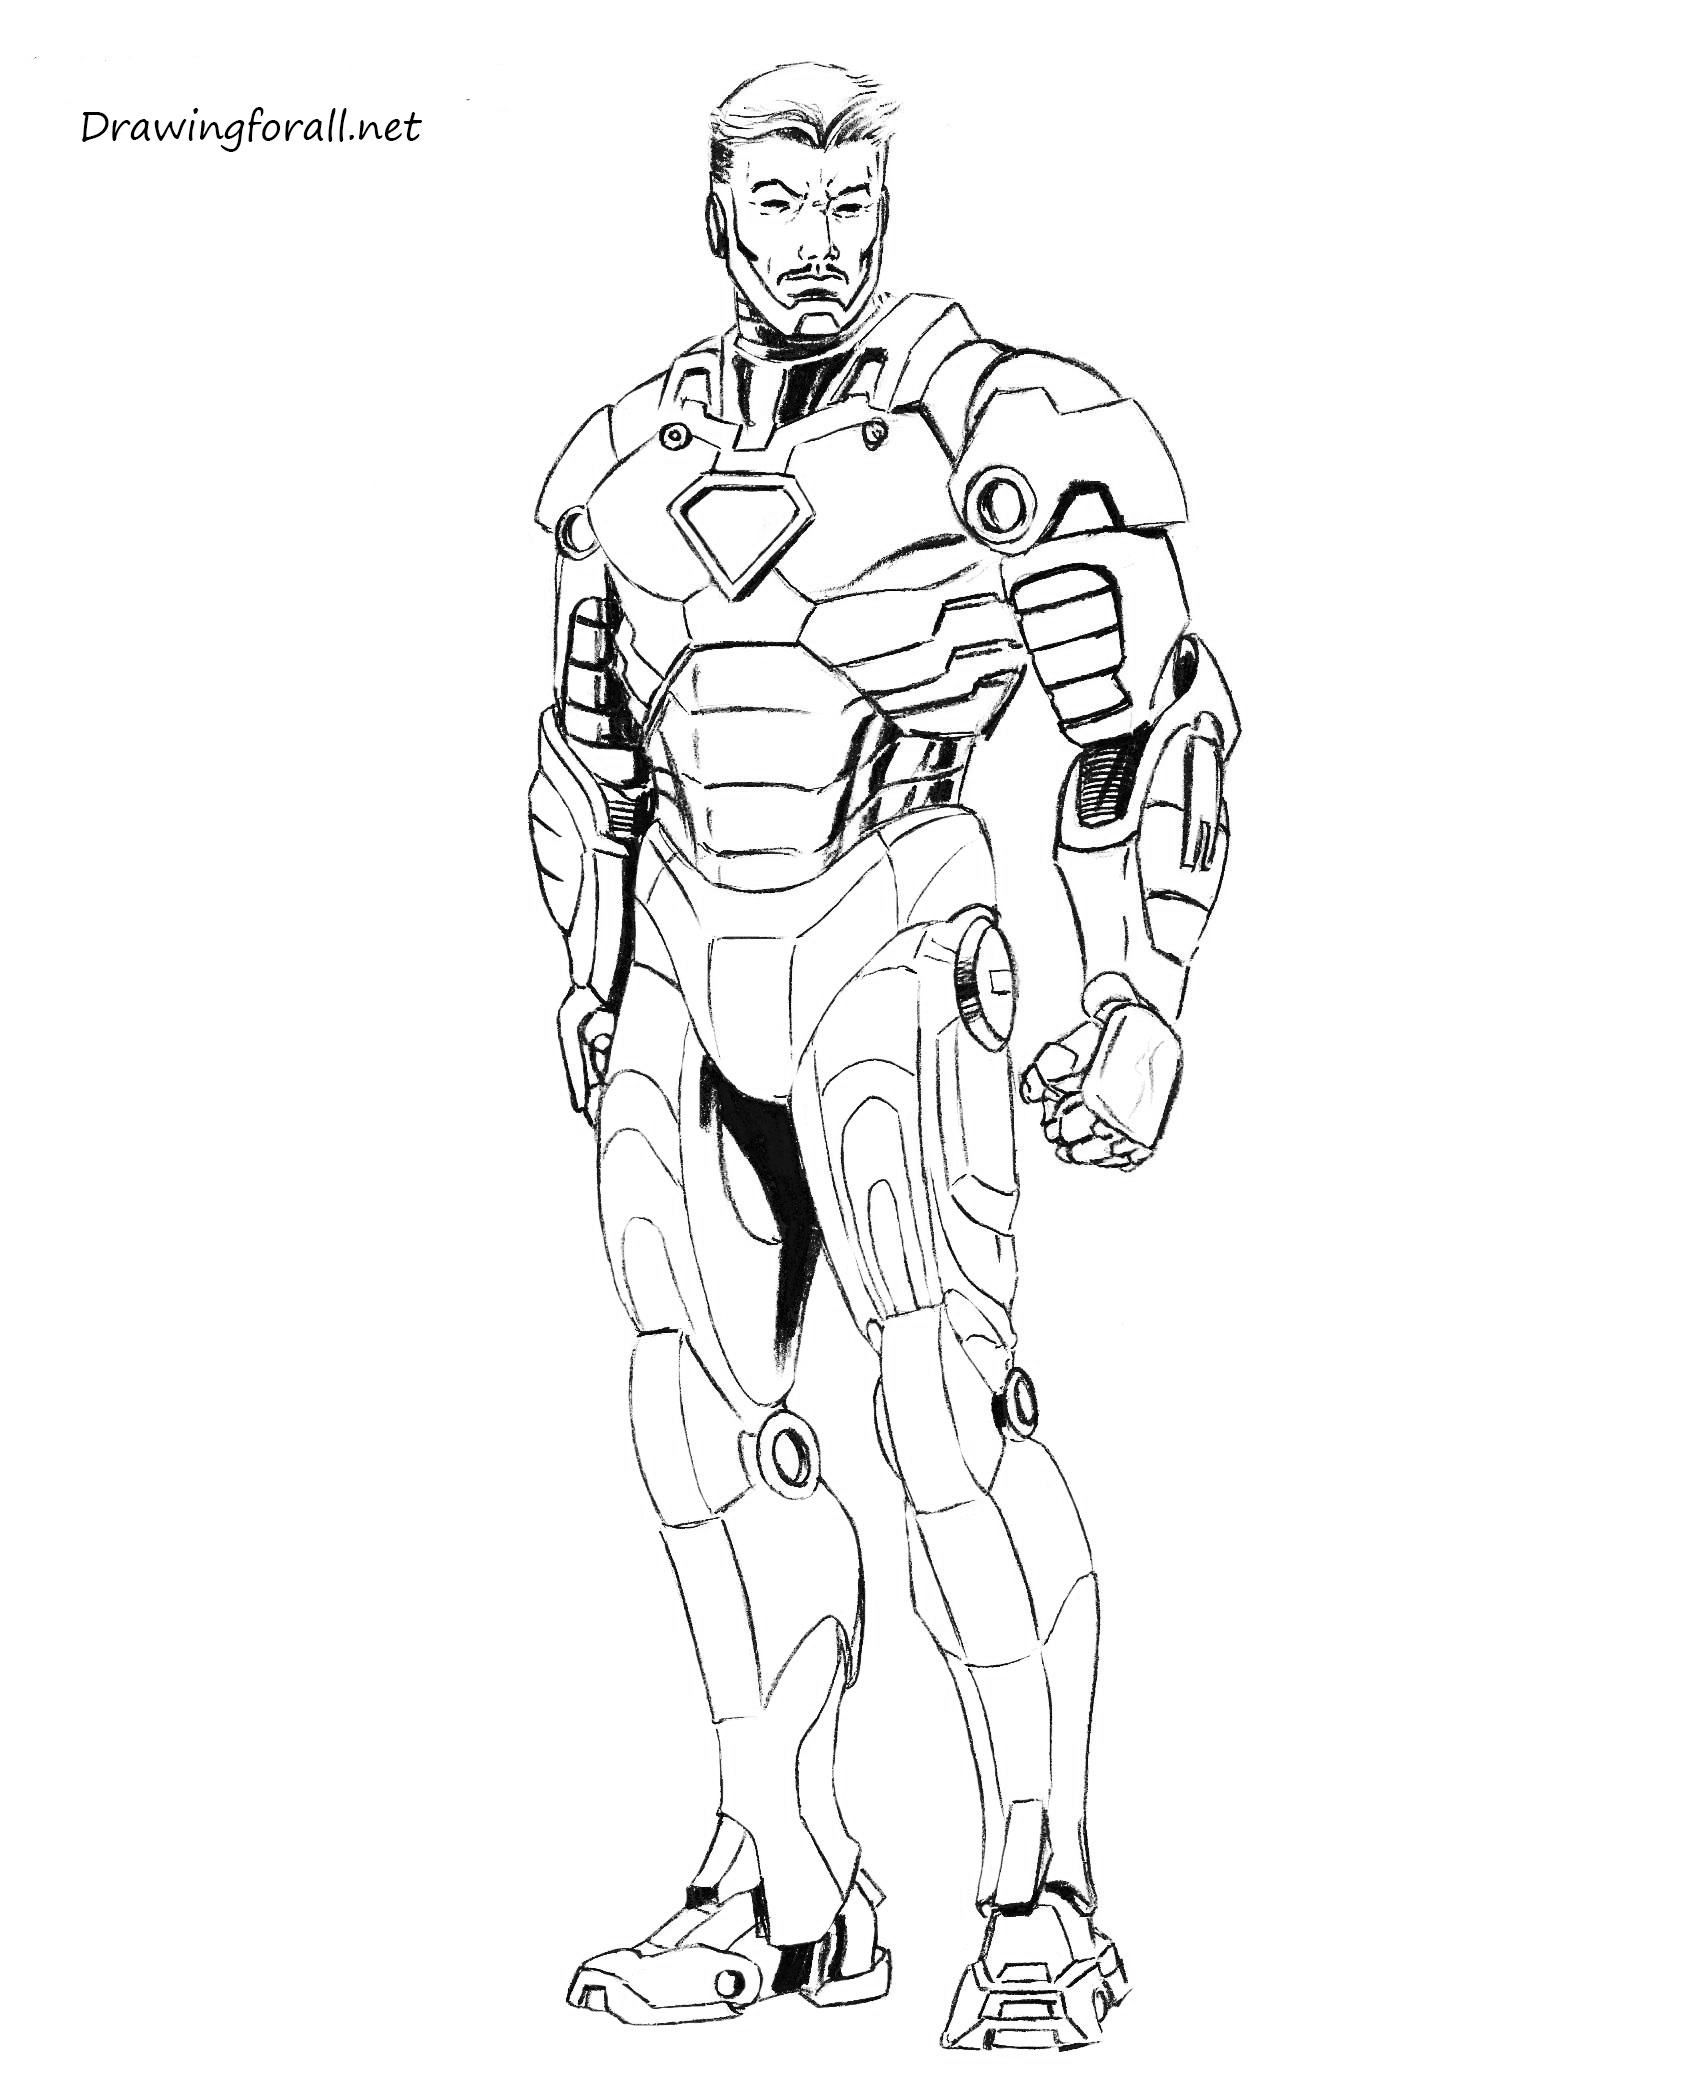 How To Draw Iron Man | YouTube Studio Sketch Tutorial - YouTube